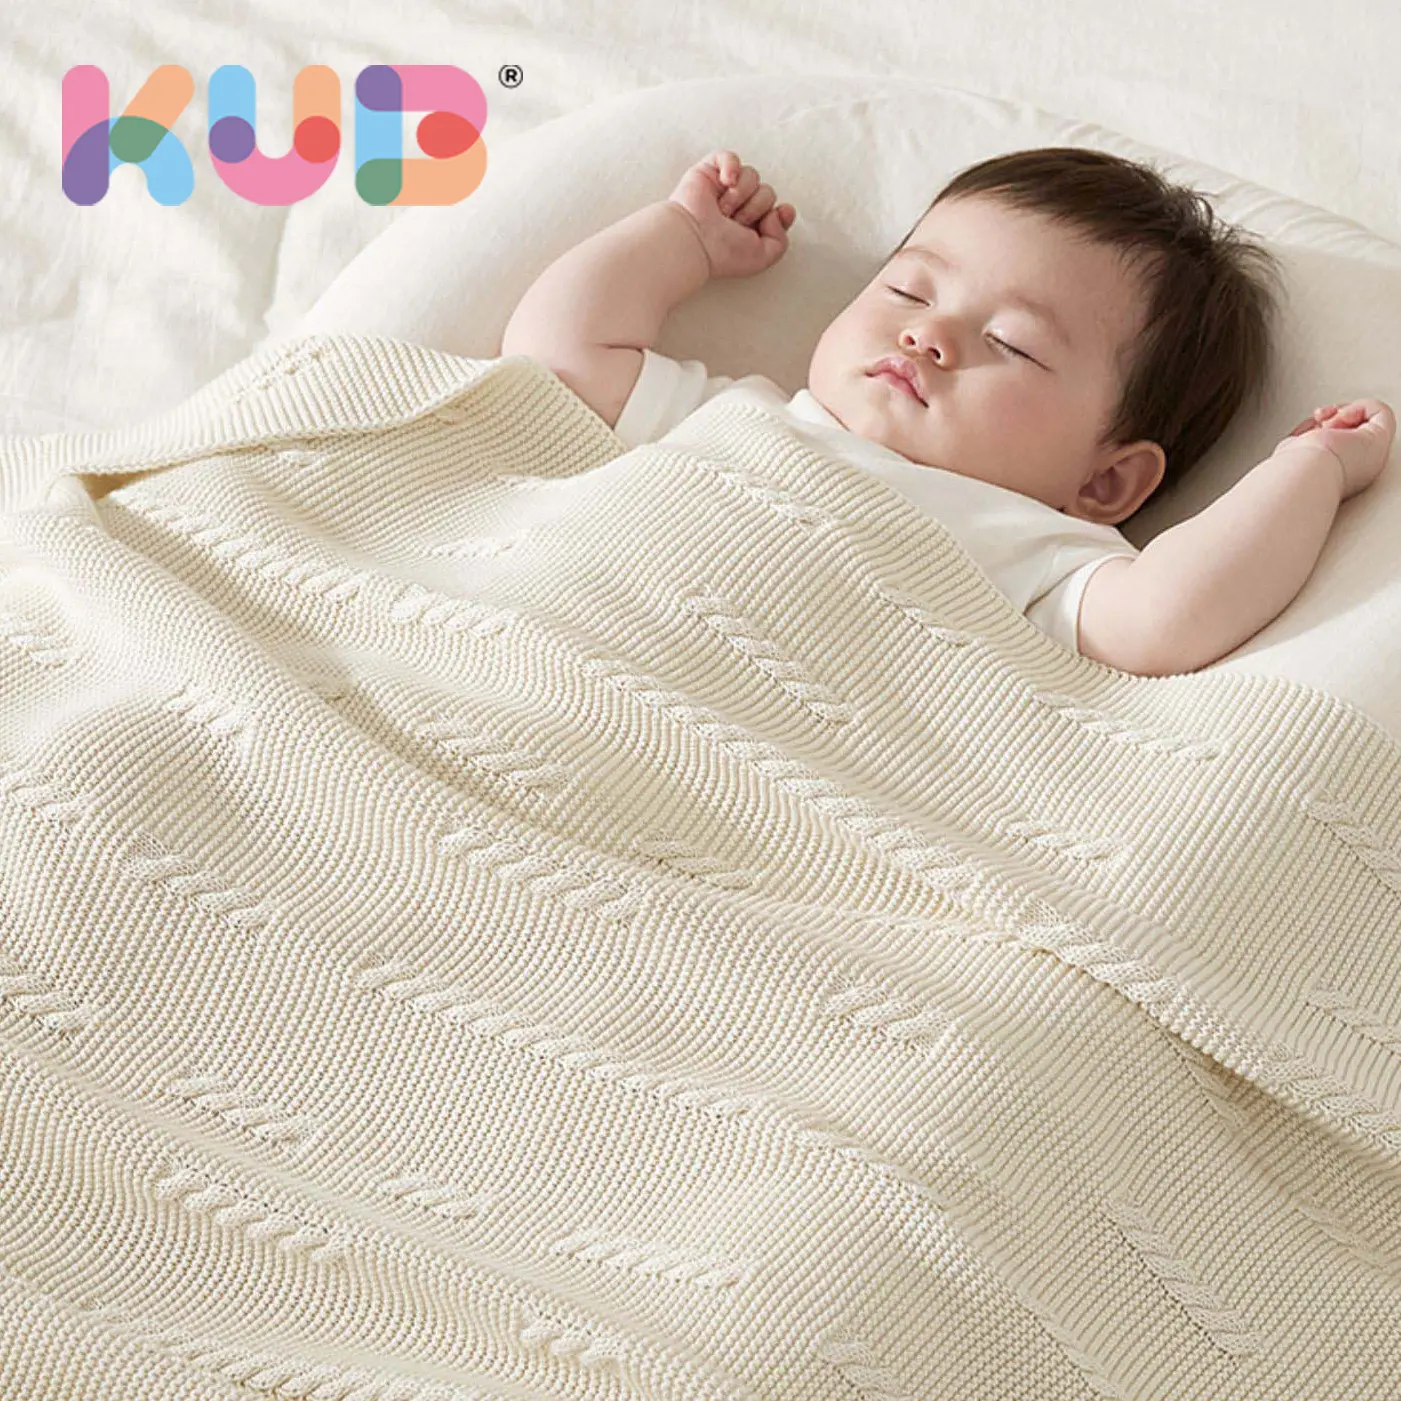 Kub No Bleaching/Fluorescent Agent/Printing Knit Baby Blanket For Newborn